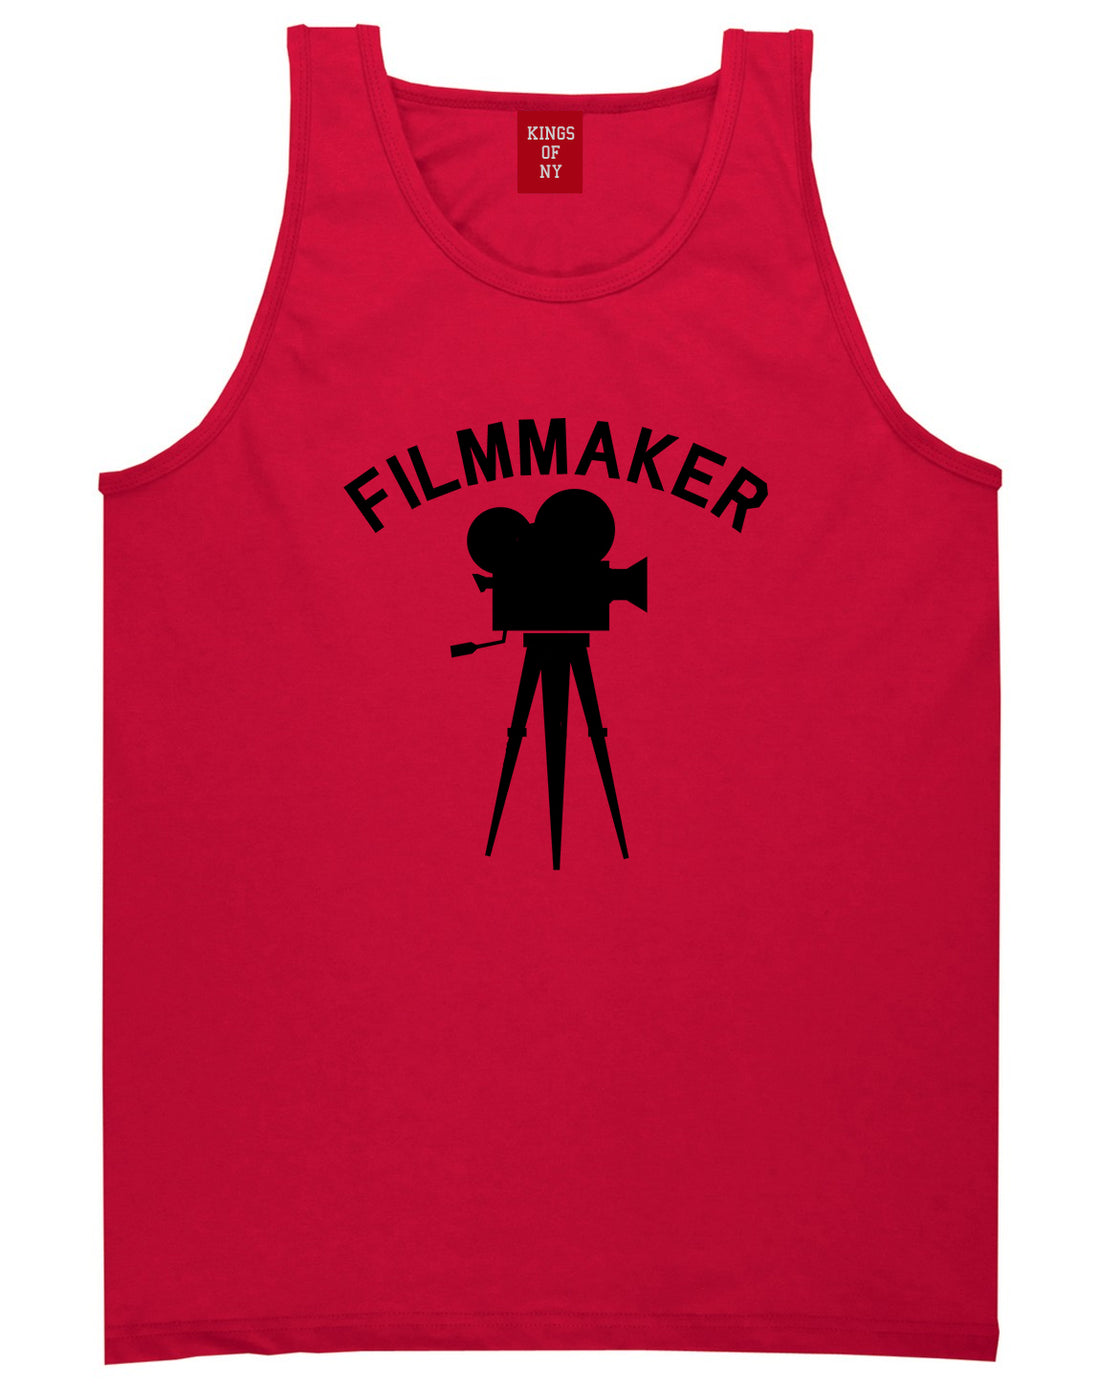 Filmmaker Camera Mens Red Tank Top Shirt by KINGS OF NY